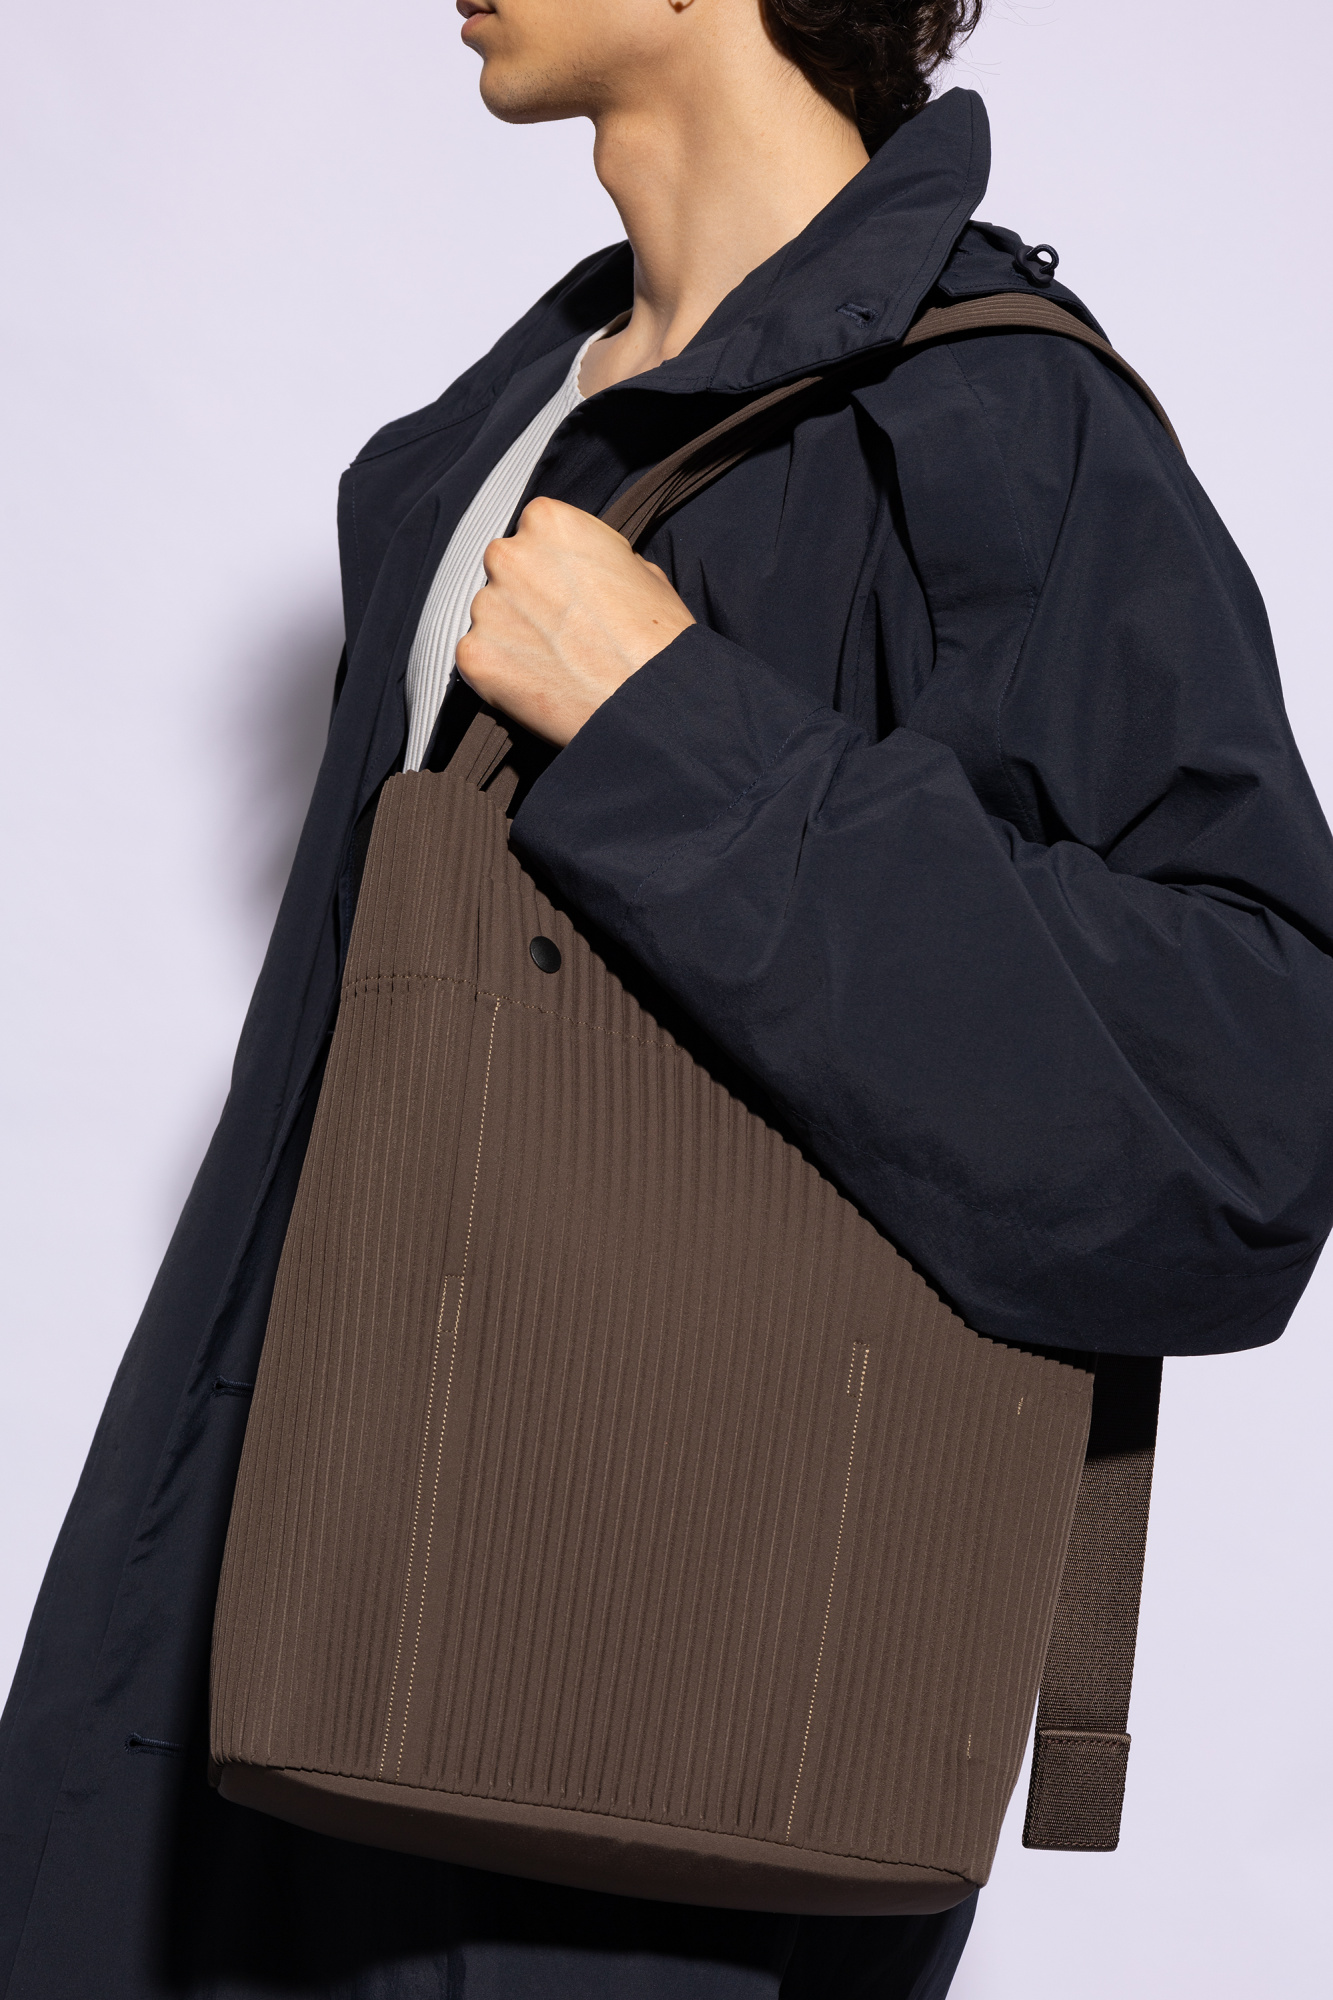 Brown Shoulder Bag Homme Plissé Issey Miyake - Vitkac Germany